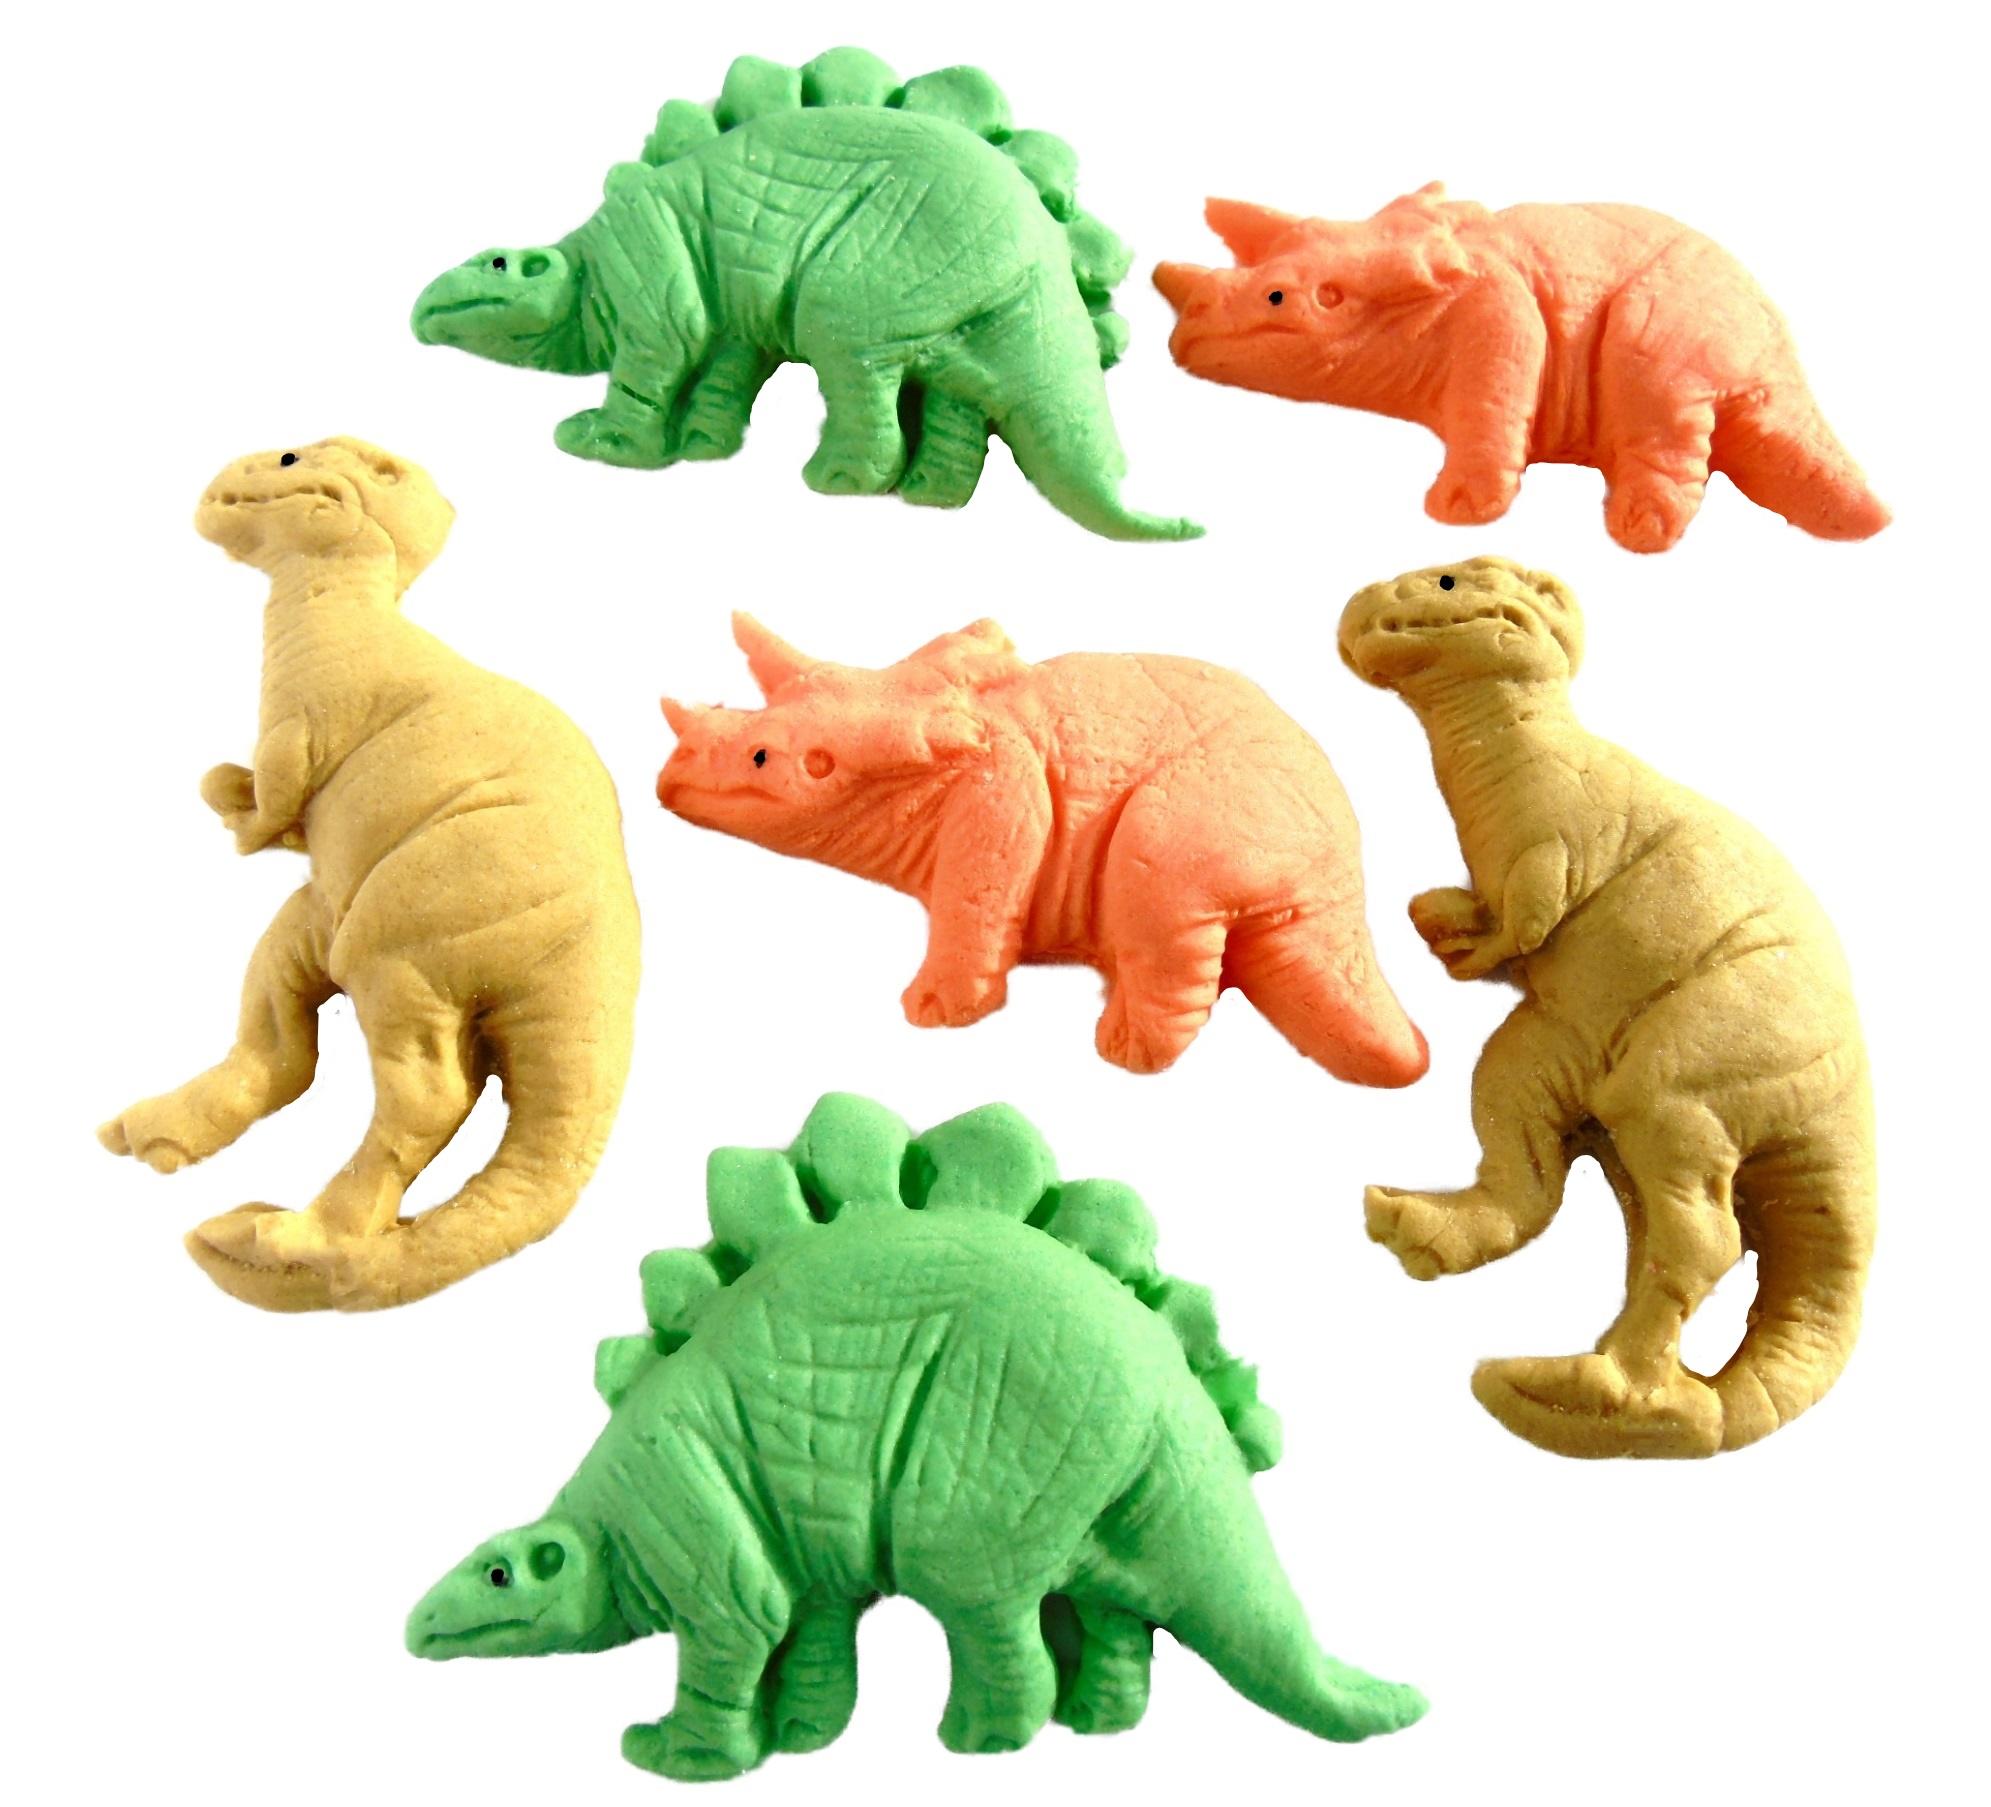 6 Mixed coloured Novelty Edible Dinosaurs Birthday Vegan Cake Decorations